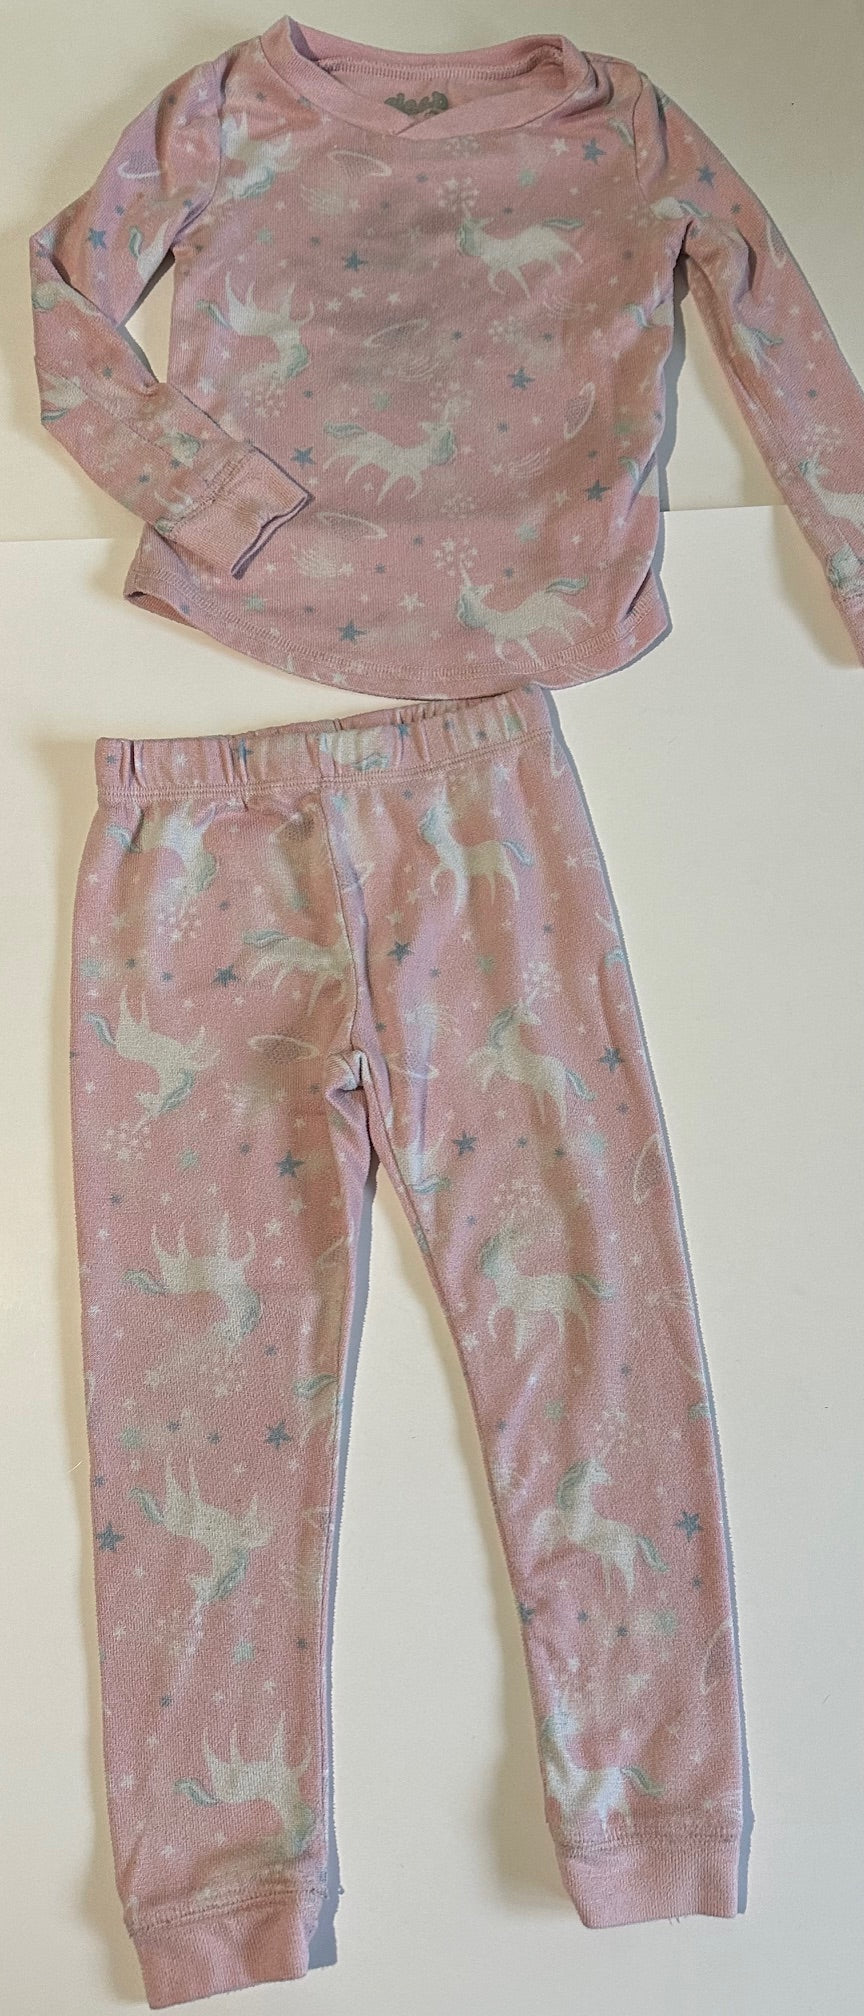 Play* Sleep On It, Two-Piece Pale Pink Unicorns Pyjamas - Size 4